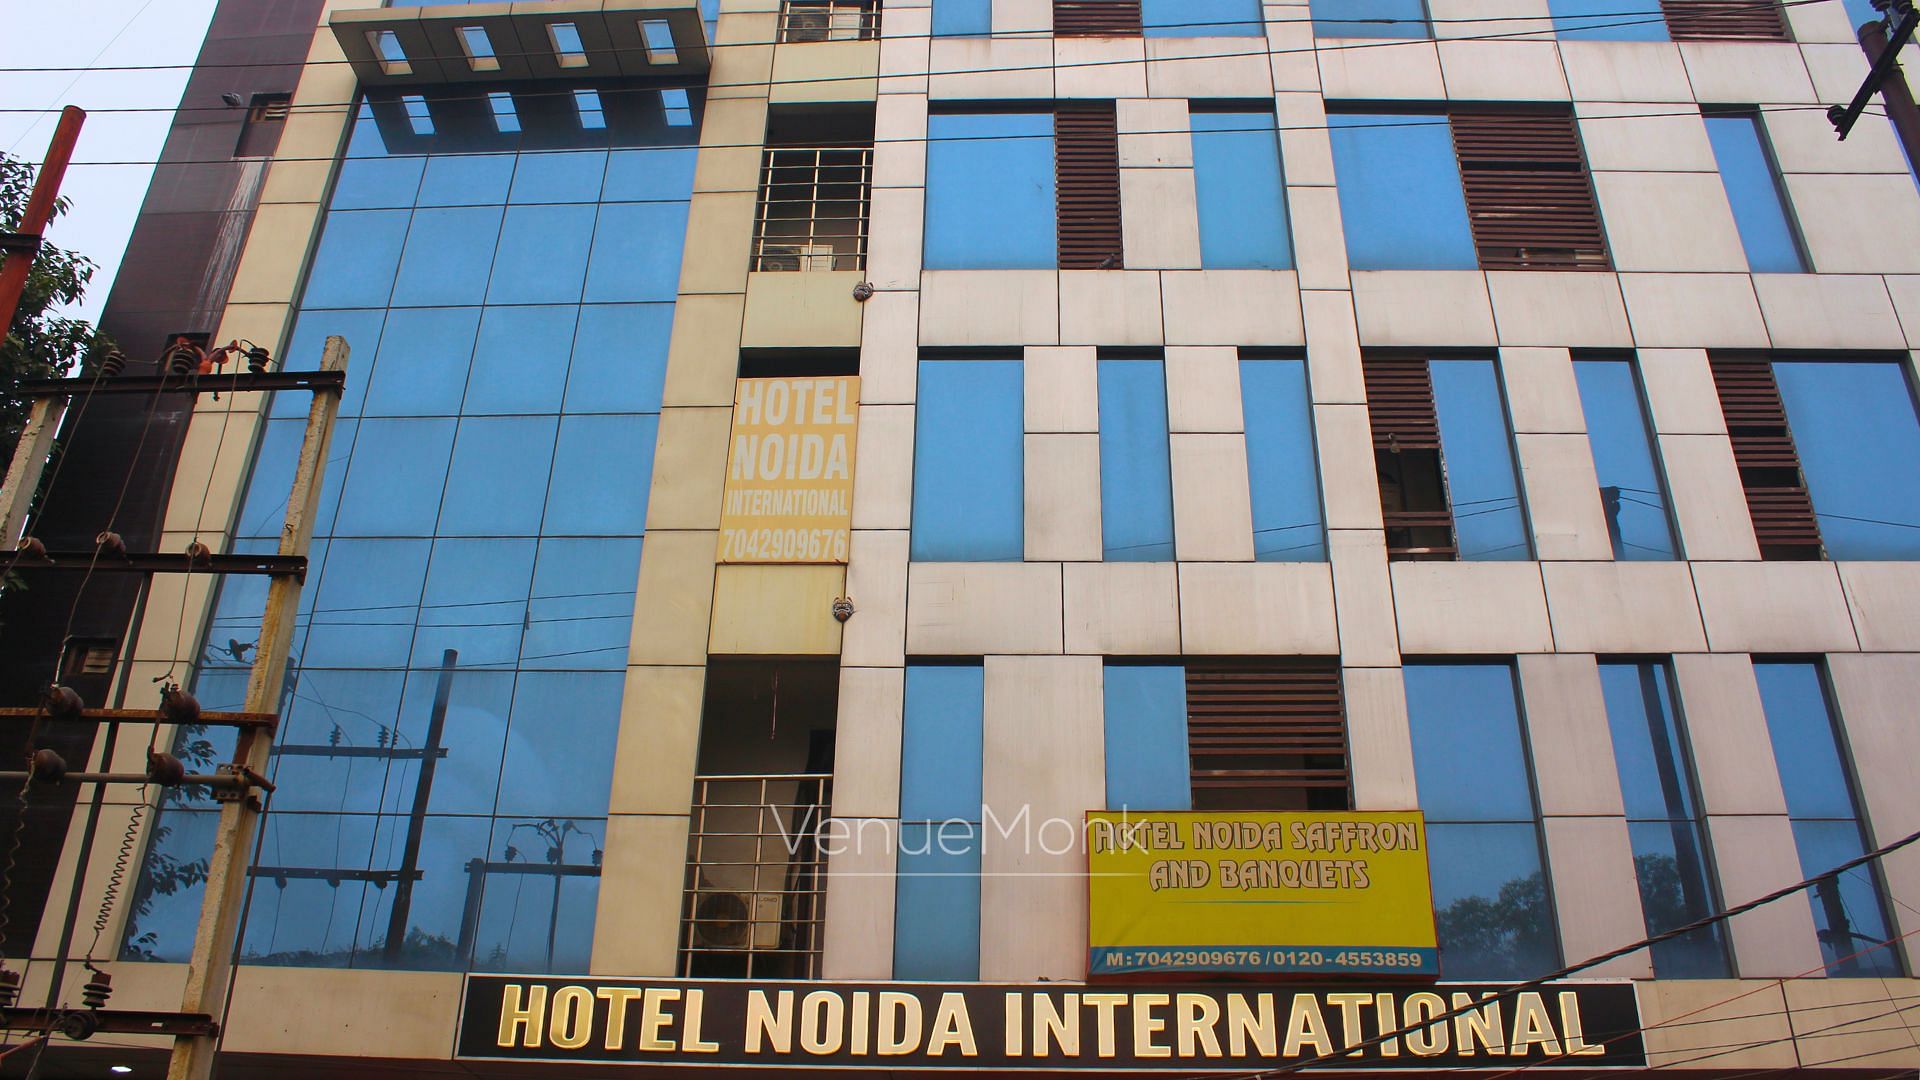 Hotel Noida International in Sector 11, Noida